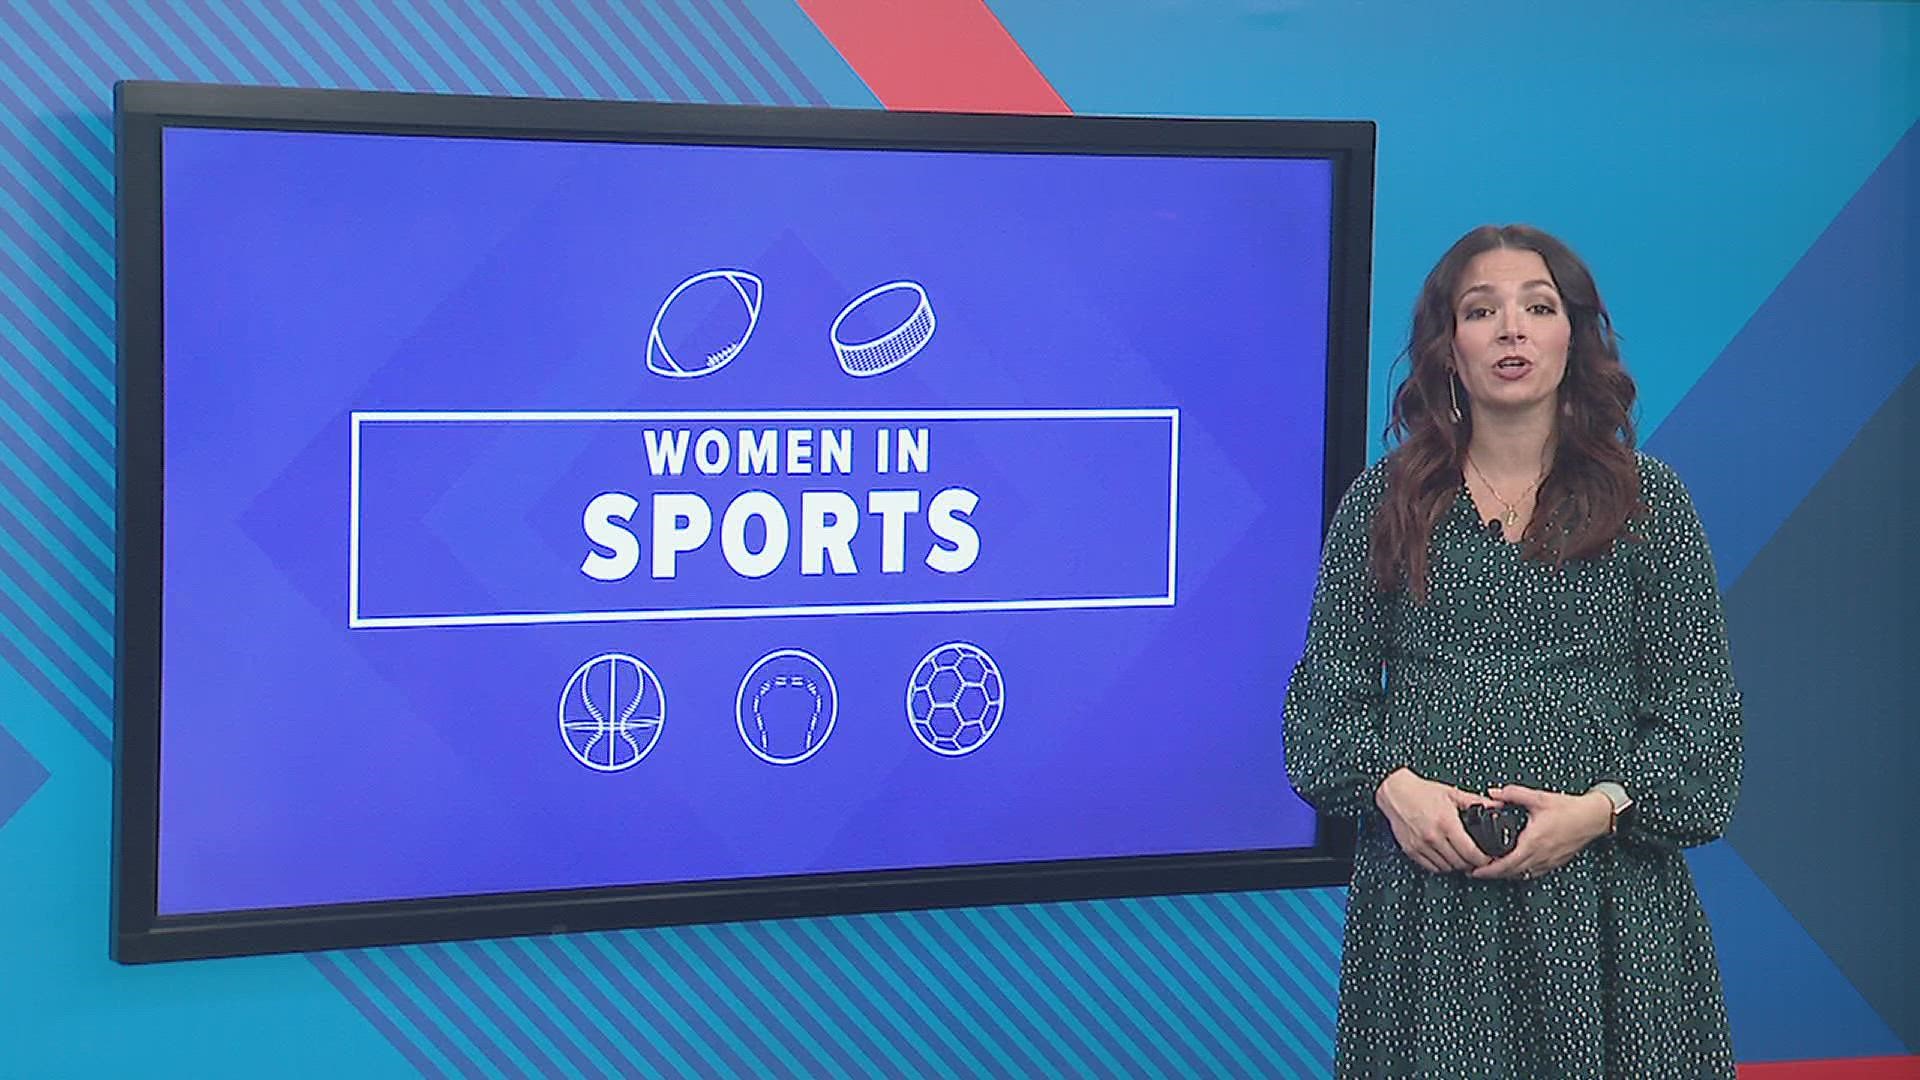 Women in Sports from November 23, 2021